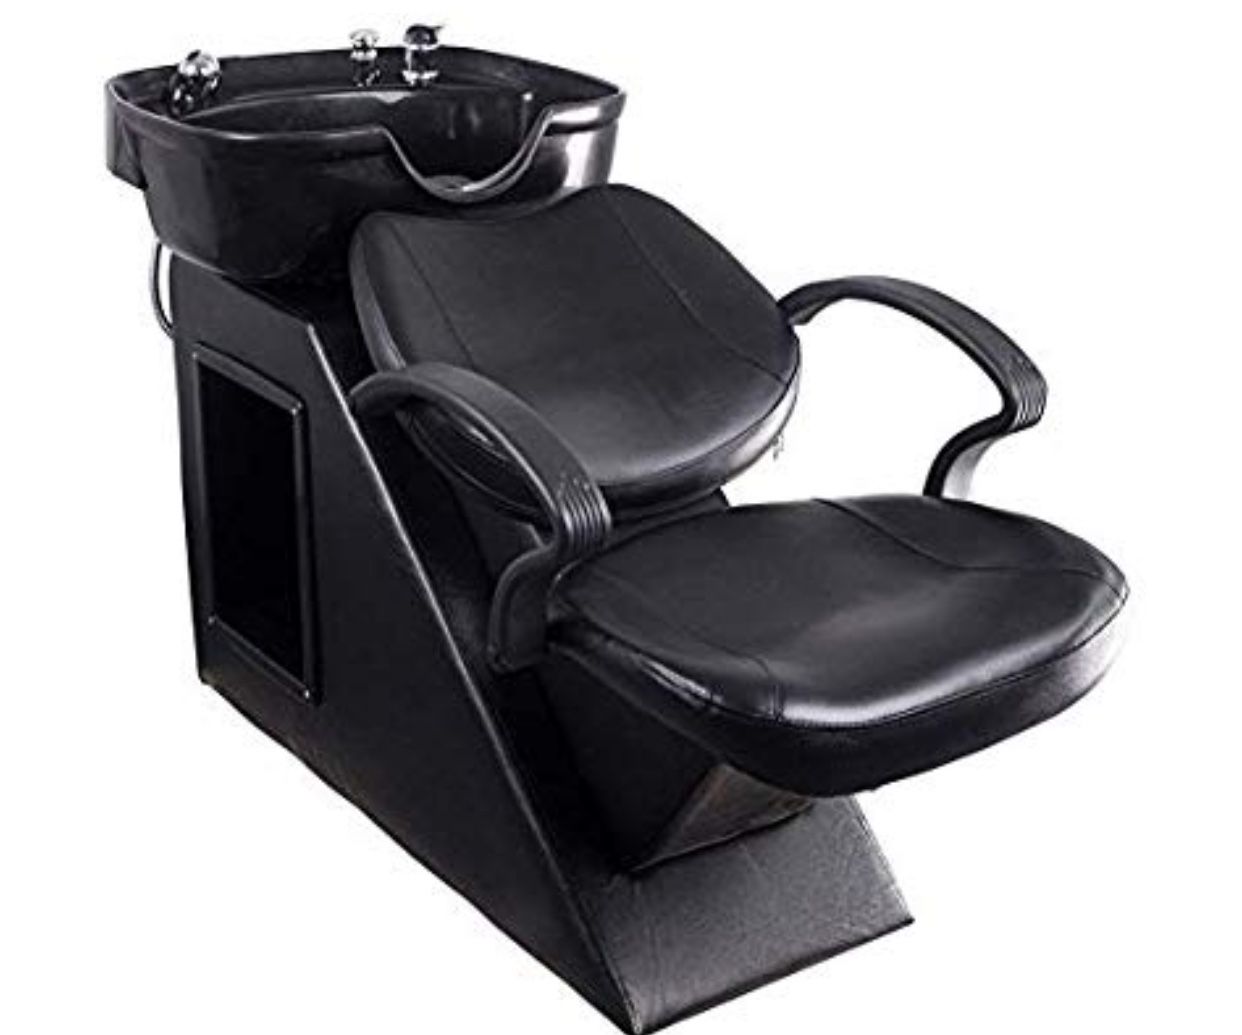 Shampoo bowl and chair